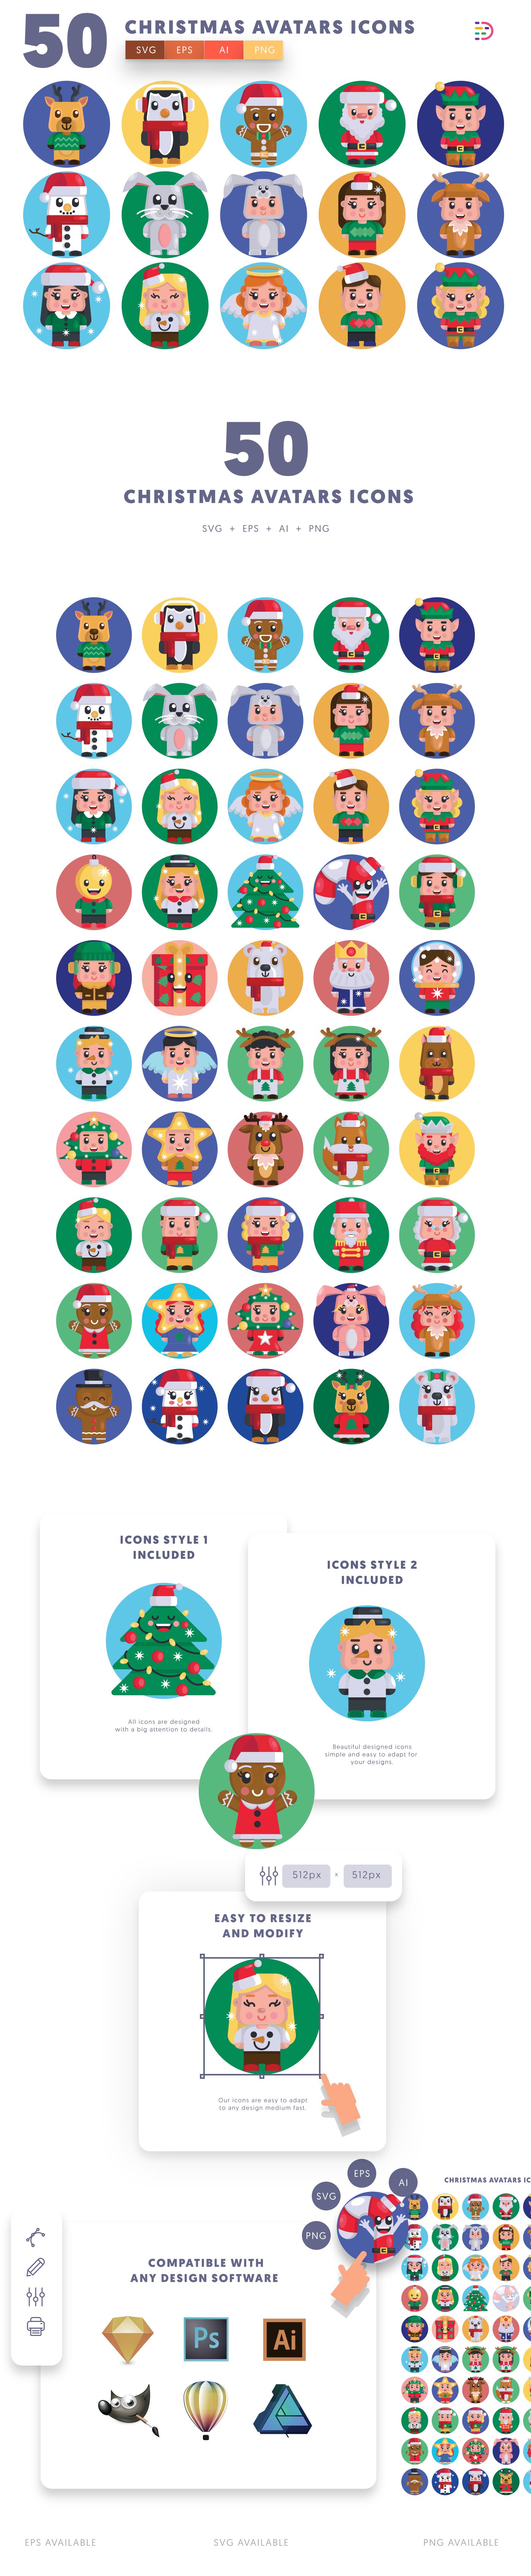 Christmas Avatars icons info graphic